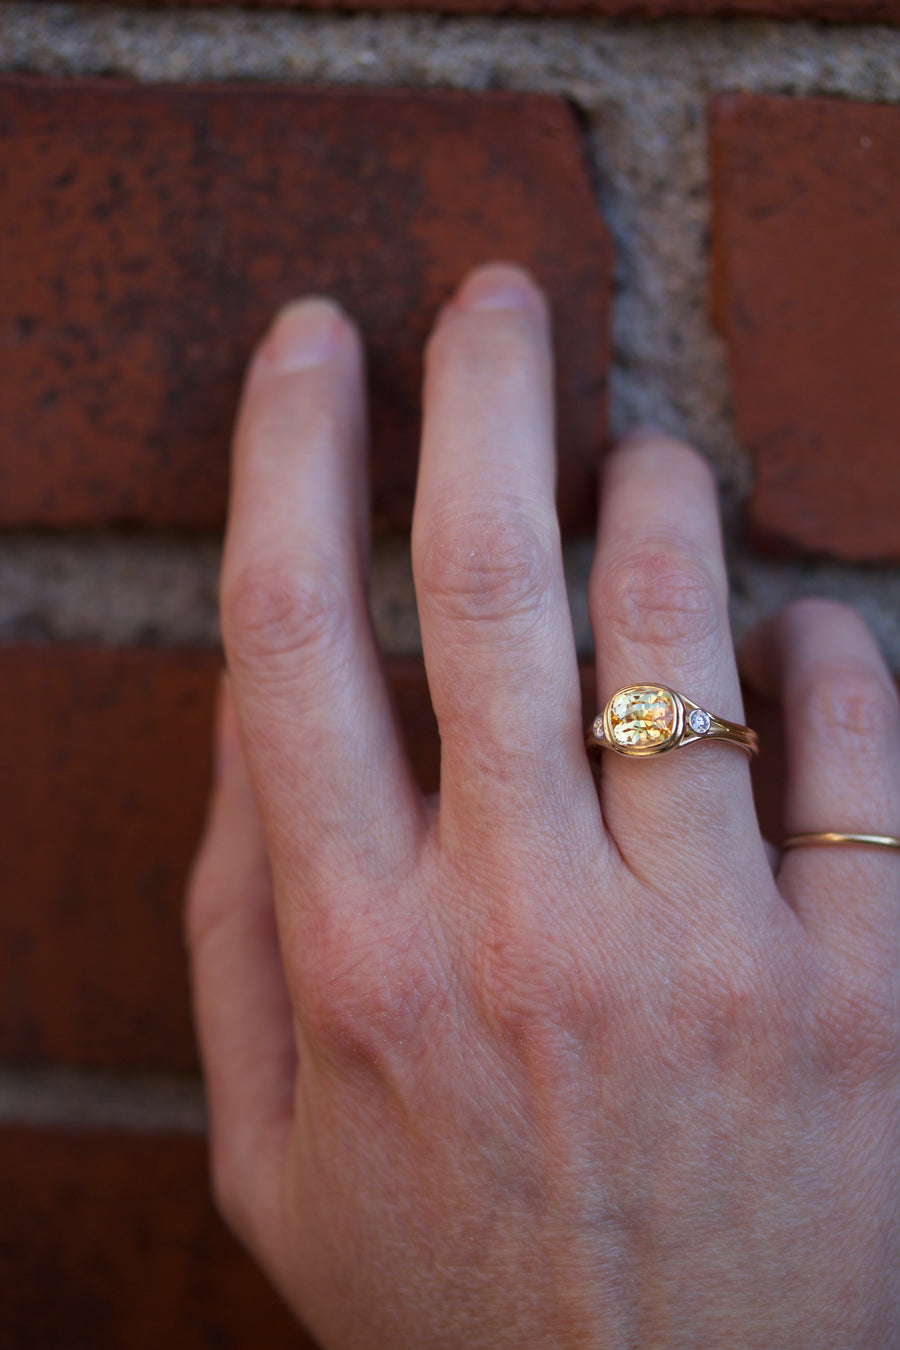 Yellow Sapphire & Diamond Lunette Ring